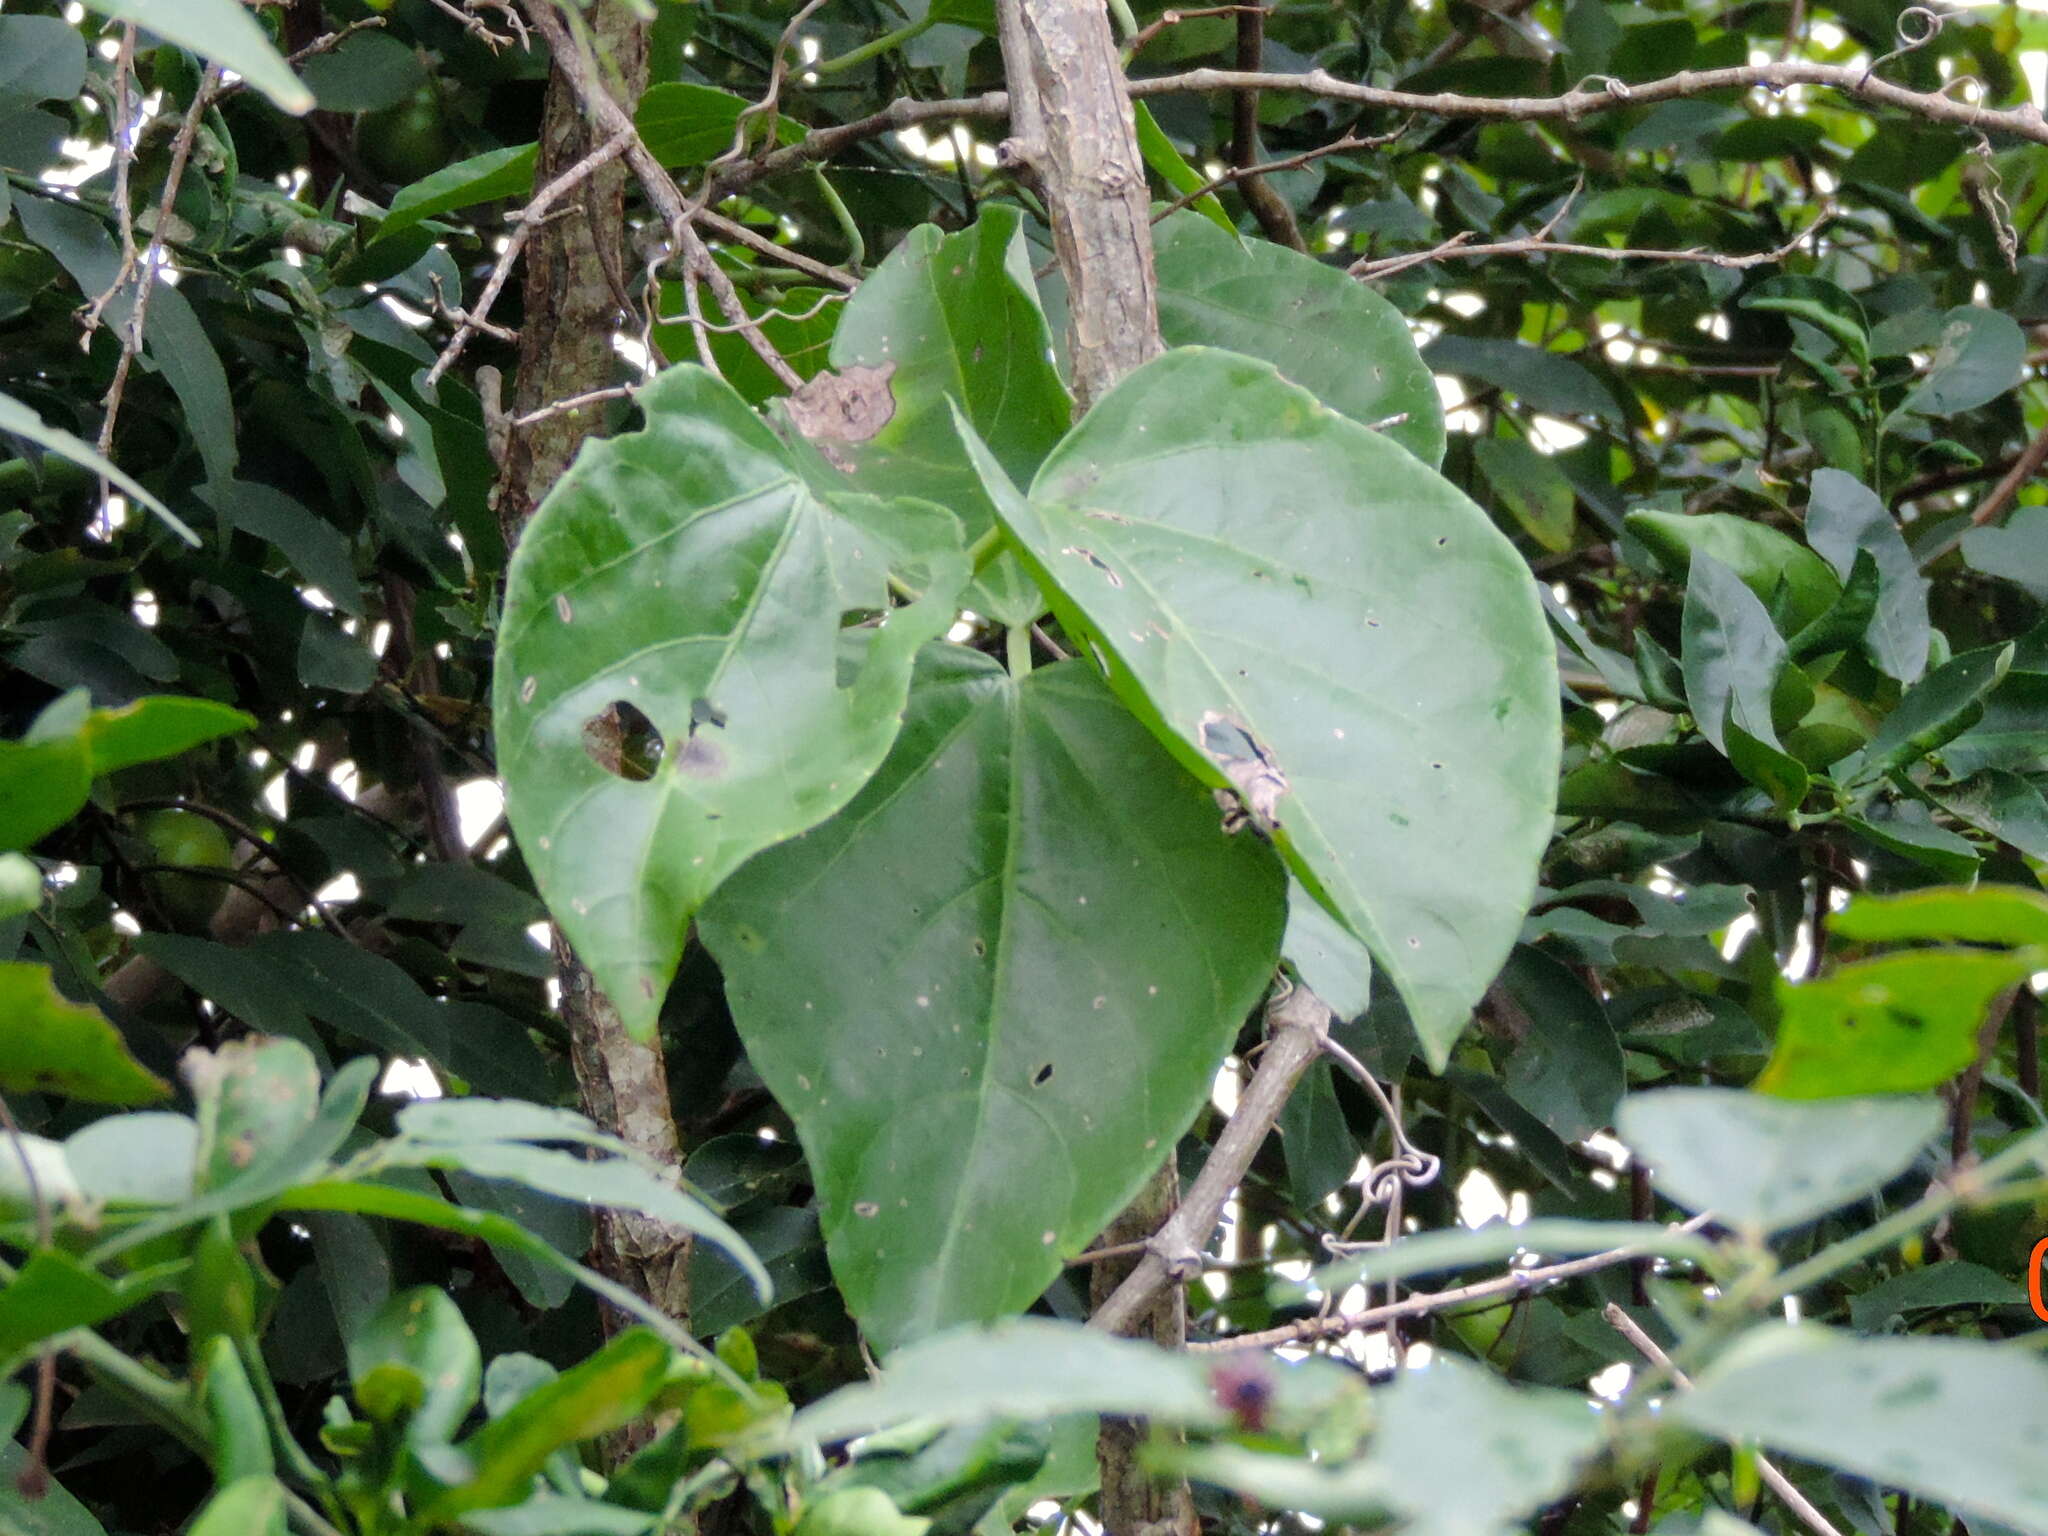 Image of grape ivy